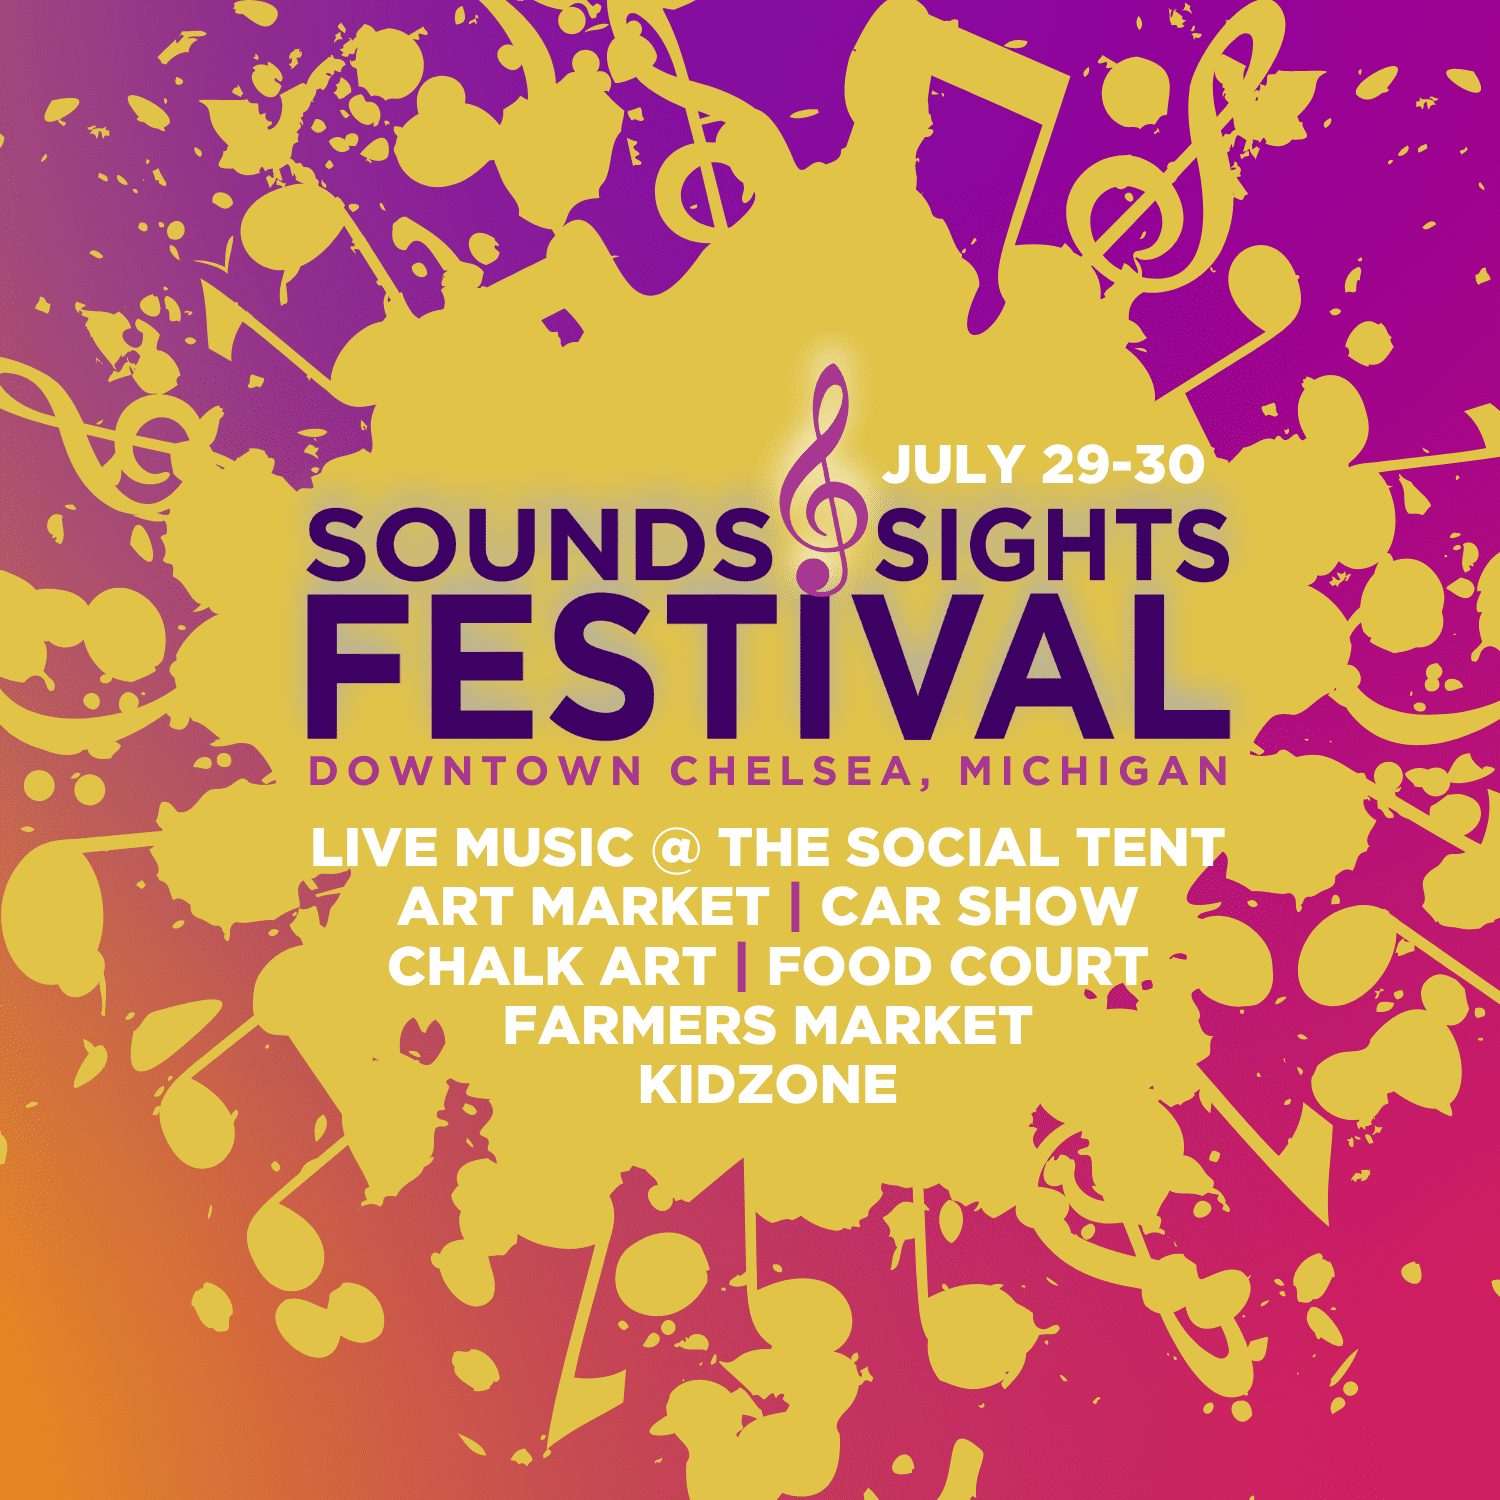 Sounds & Sights Festival Chelsea Michigan